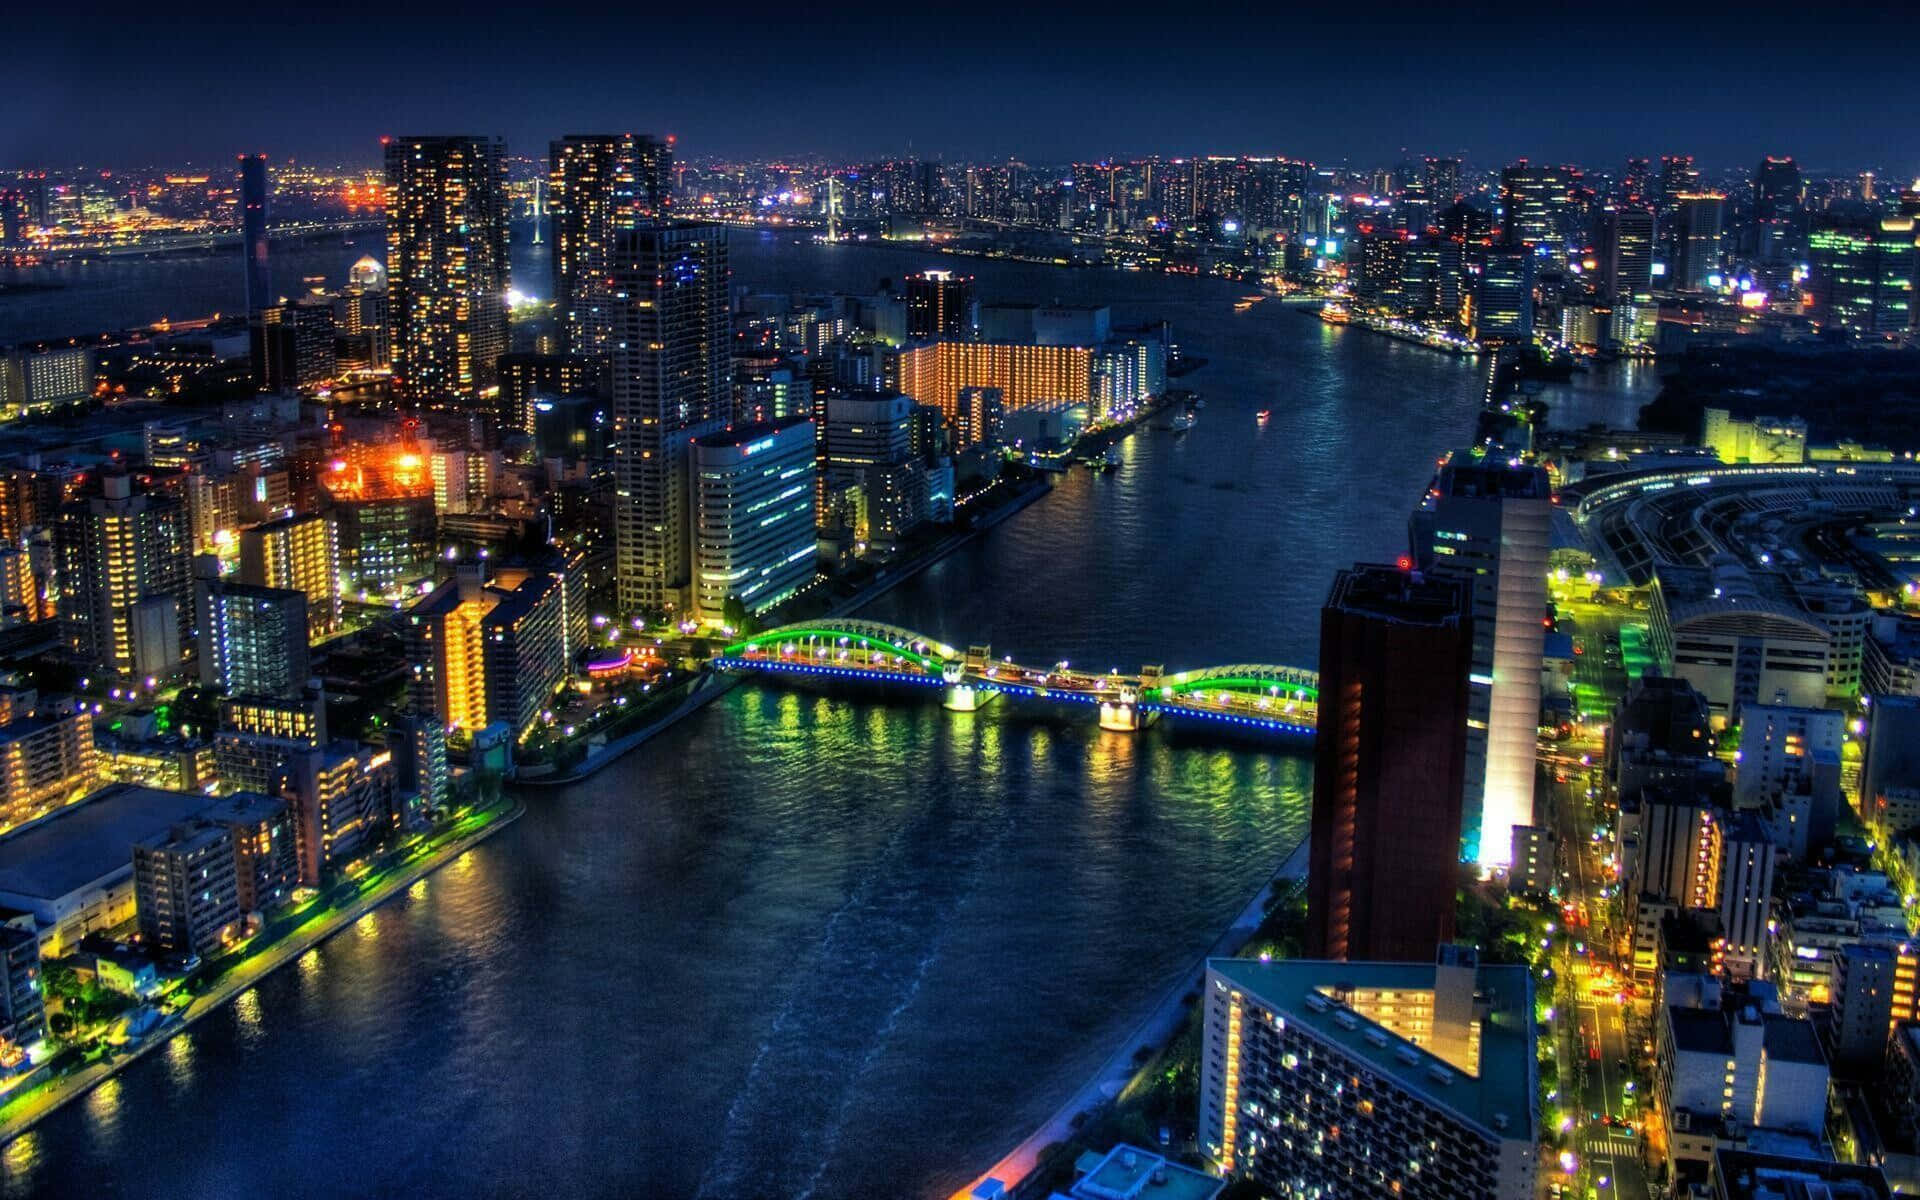 Hintergrundbildvon Tokio, Kachidoki-brücke Bei Nacht.